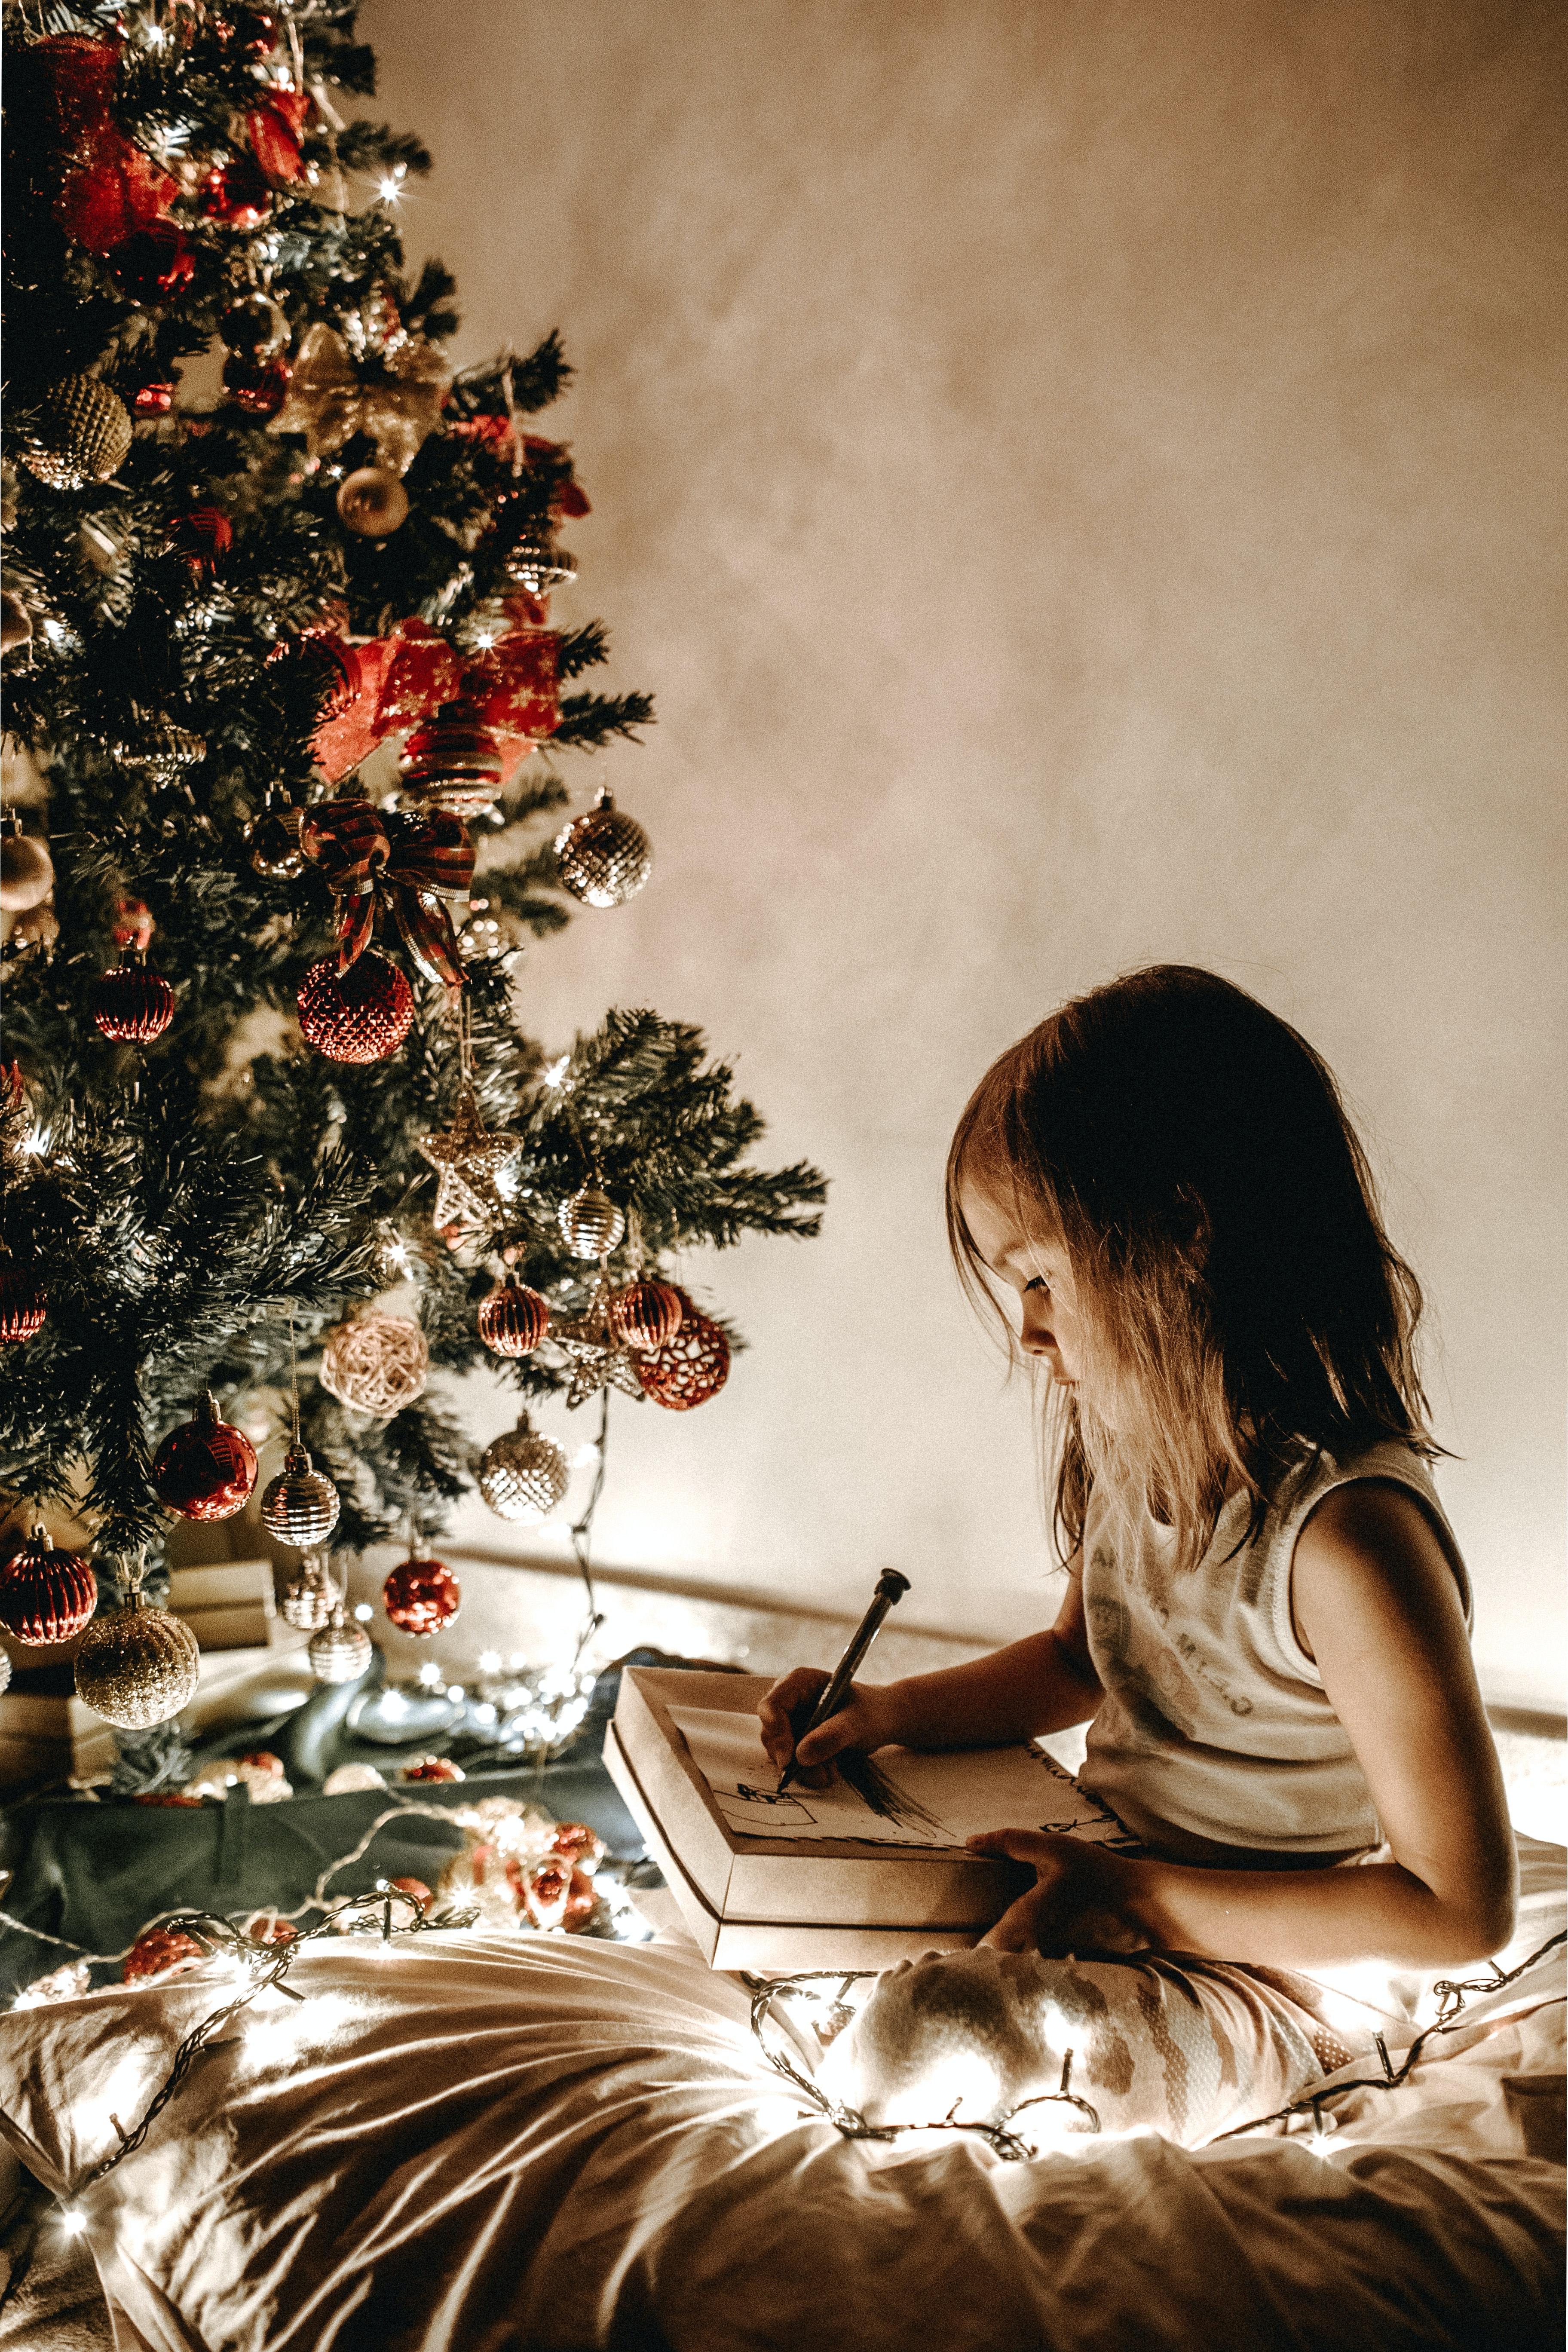 Child sitting next to Christmas tree